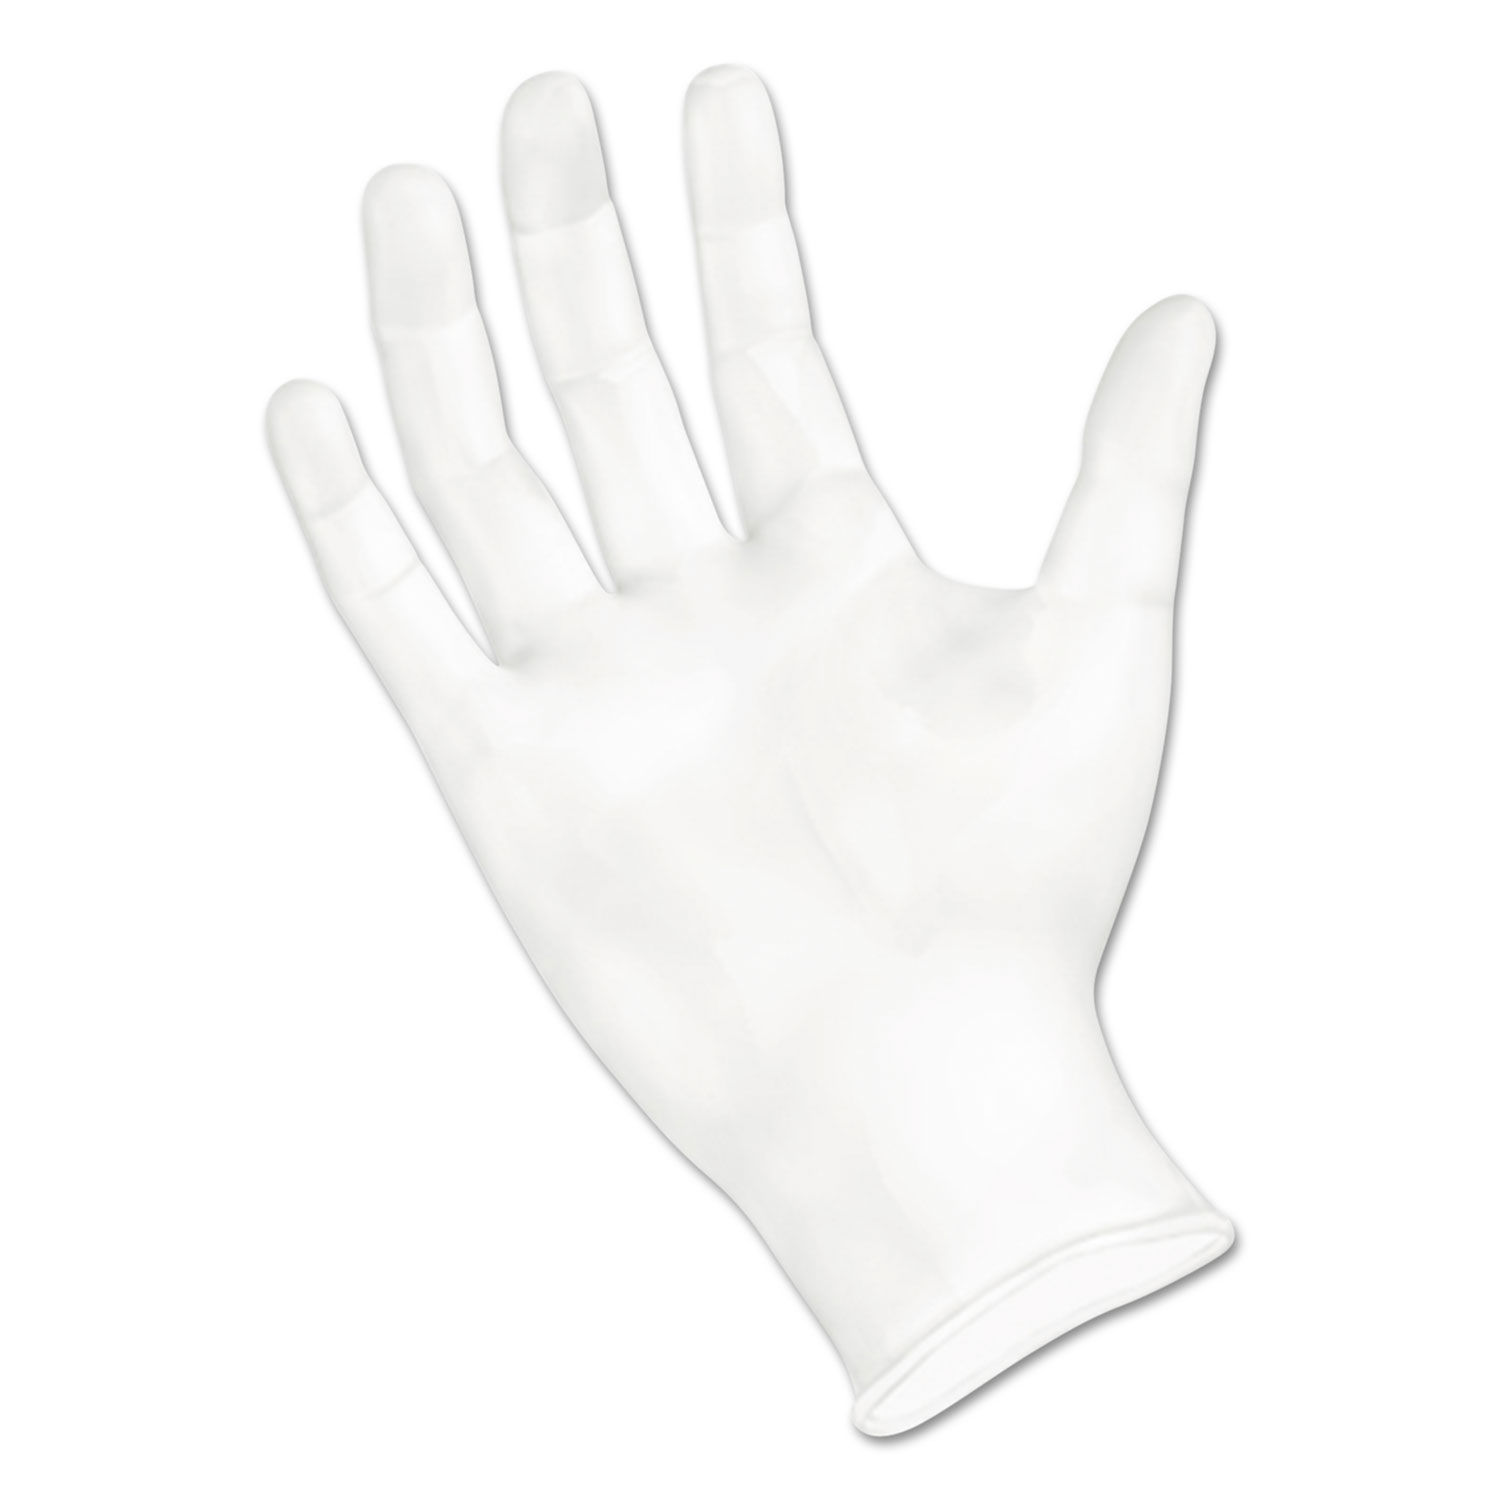 General Purpose Vinyl Gloves, Powder/Latex-Free, 2 3/5 mil, Large, Clear, 100/Bx